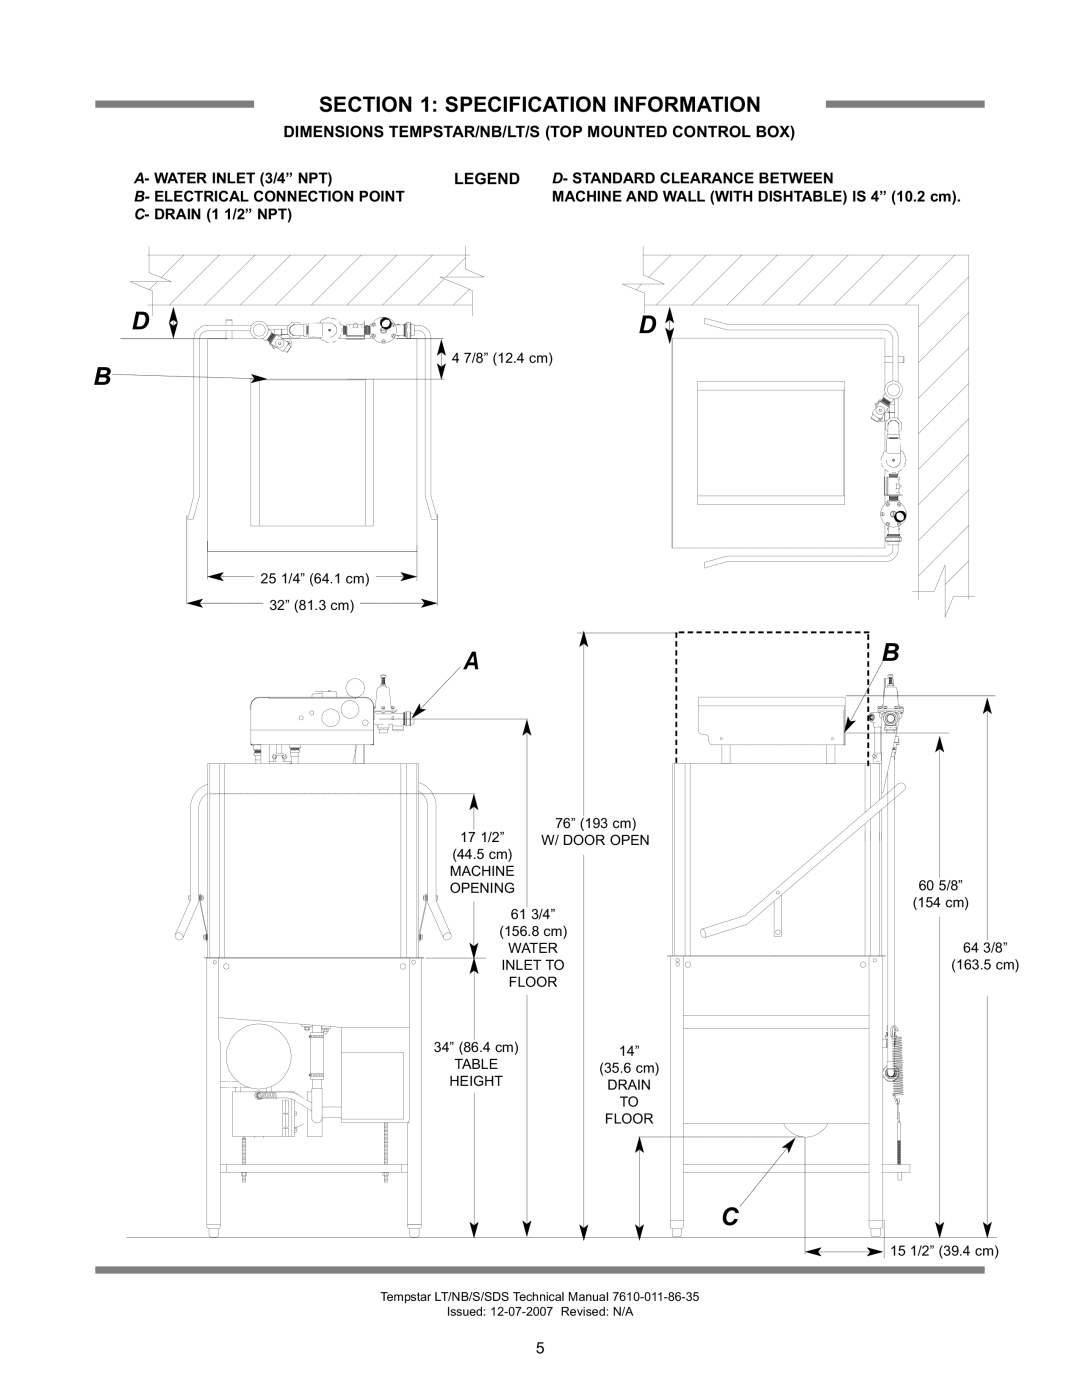 Jackson Tempstar Series technical manual Dimensions TEMPSTAR/NB/LT/S TOP Mounted Control BOX, Height Drain Floor 